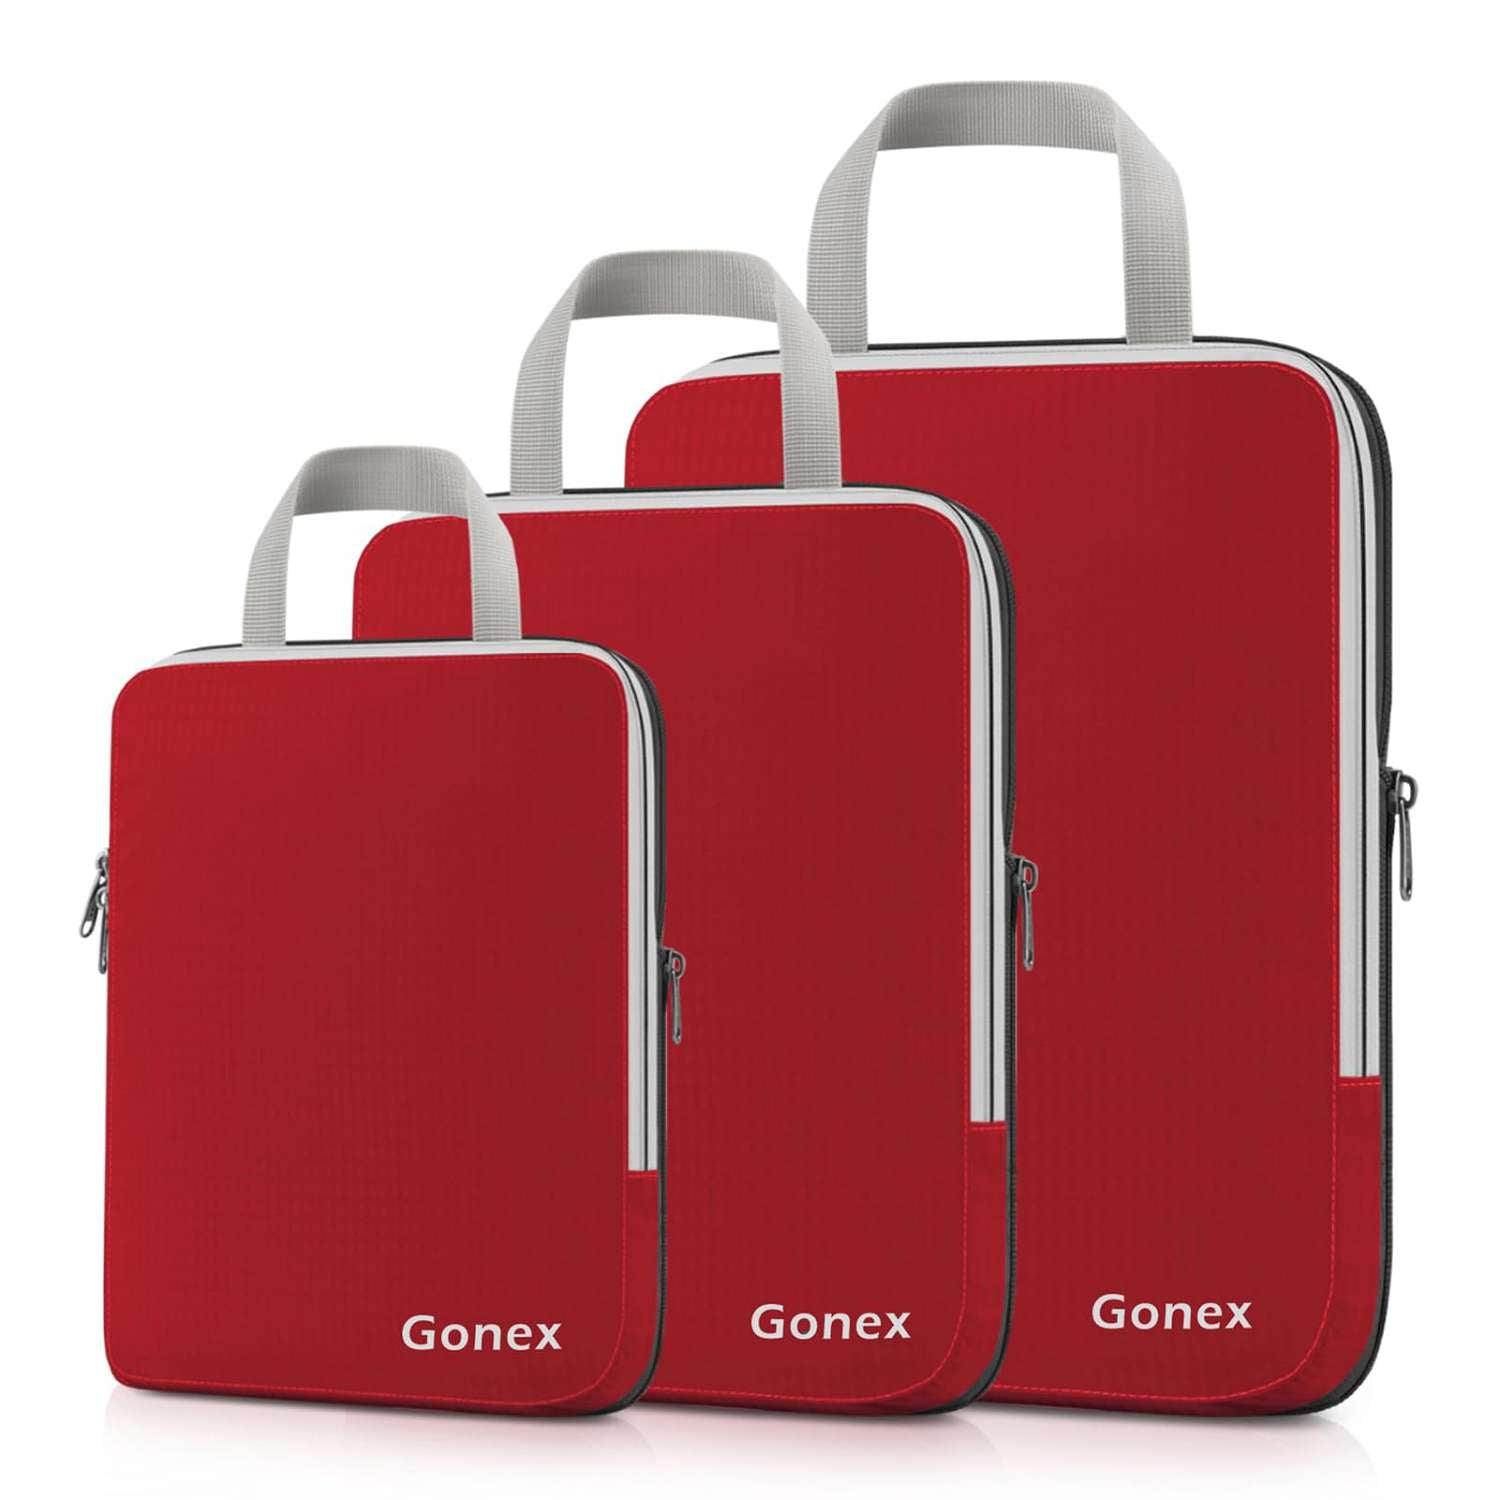 Gonex Floral Compression Packing Cubes